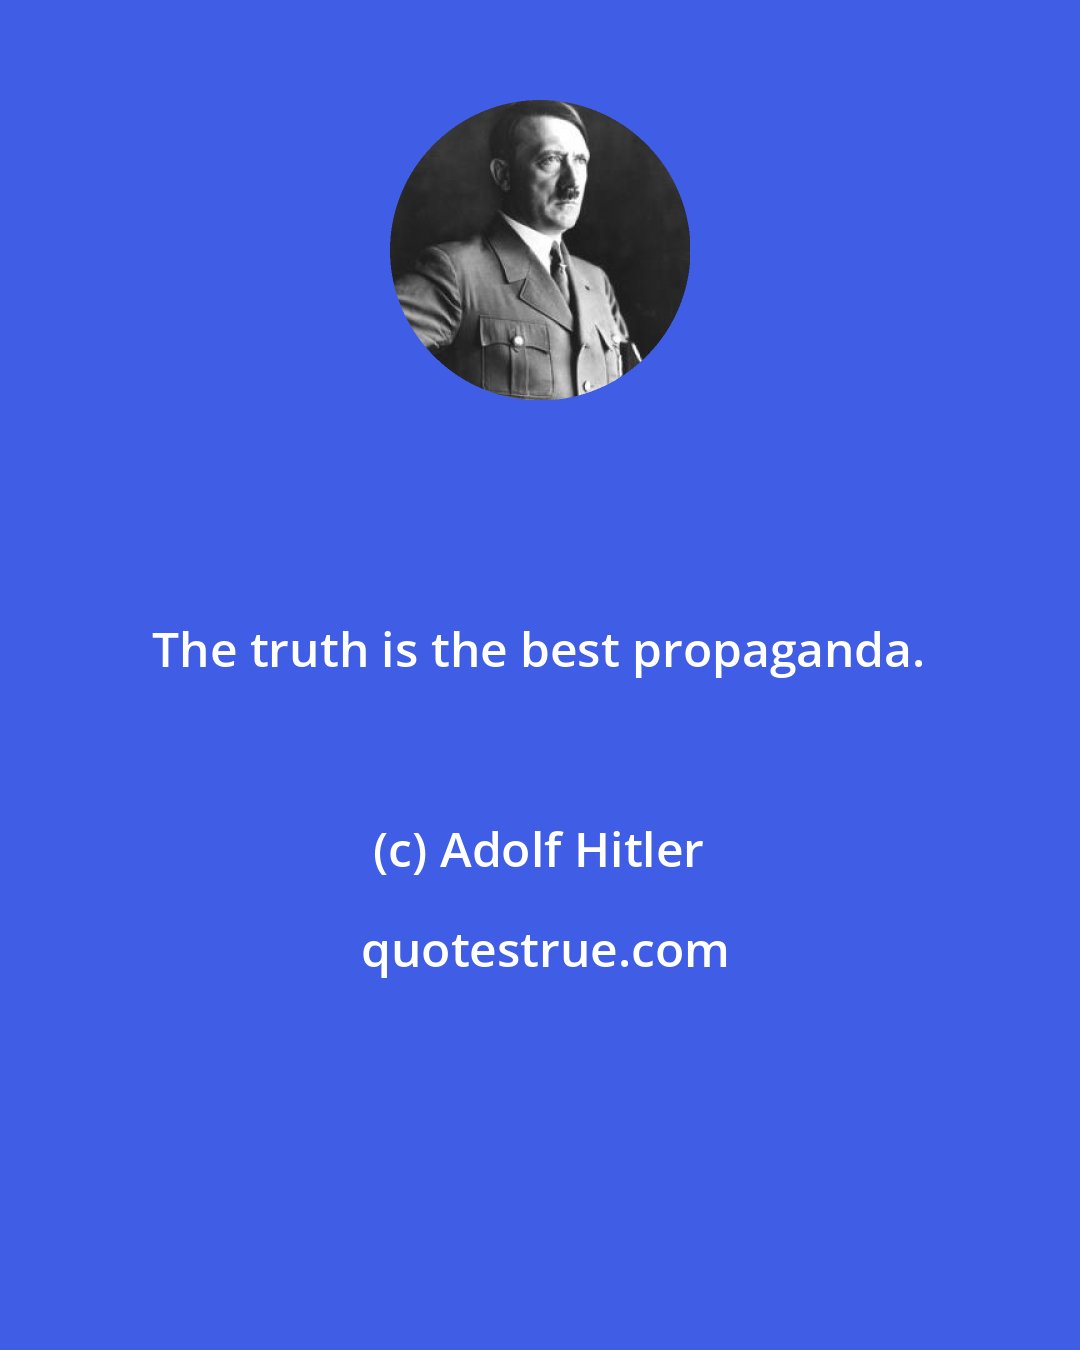 Adolf Hitler: The truth is the best propaganda.